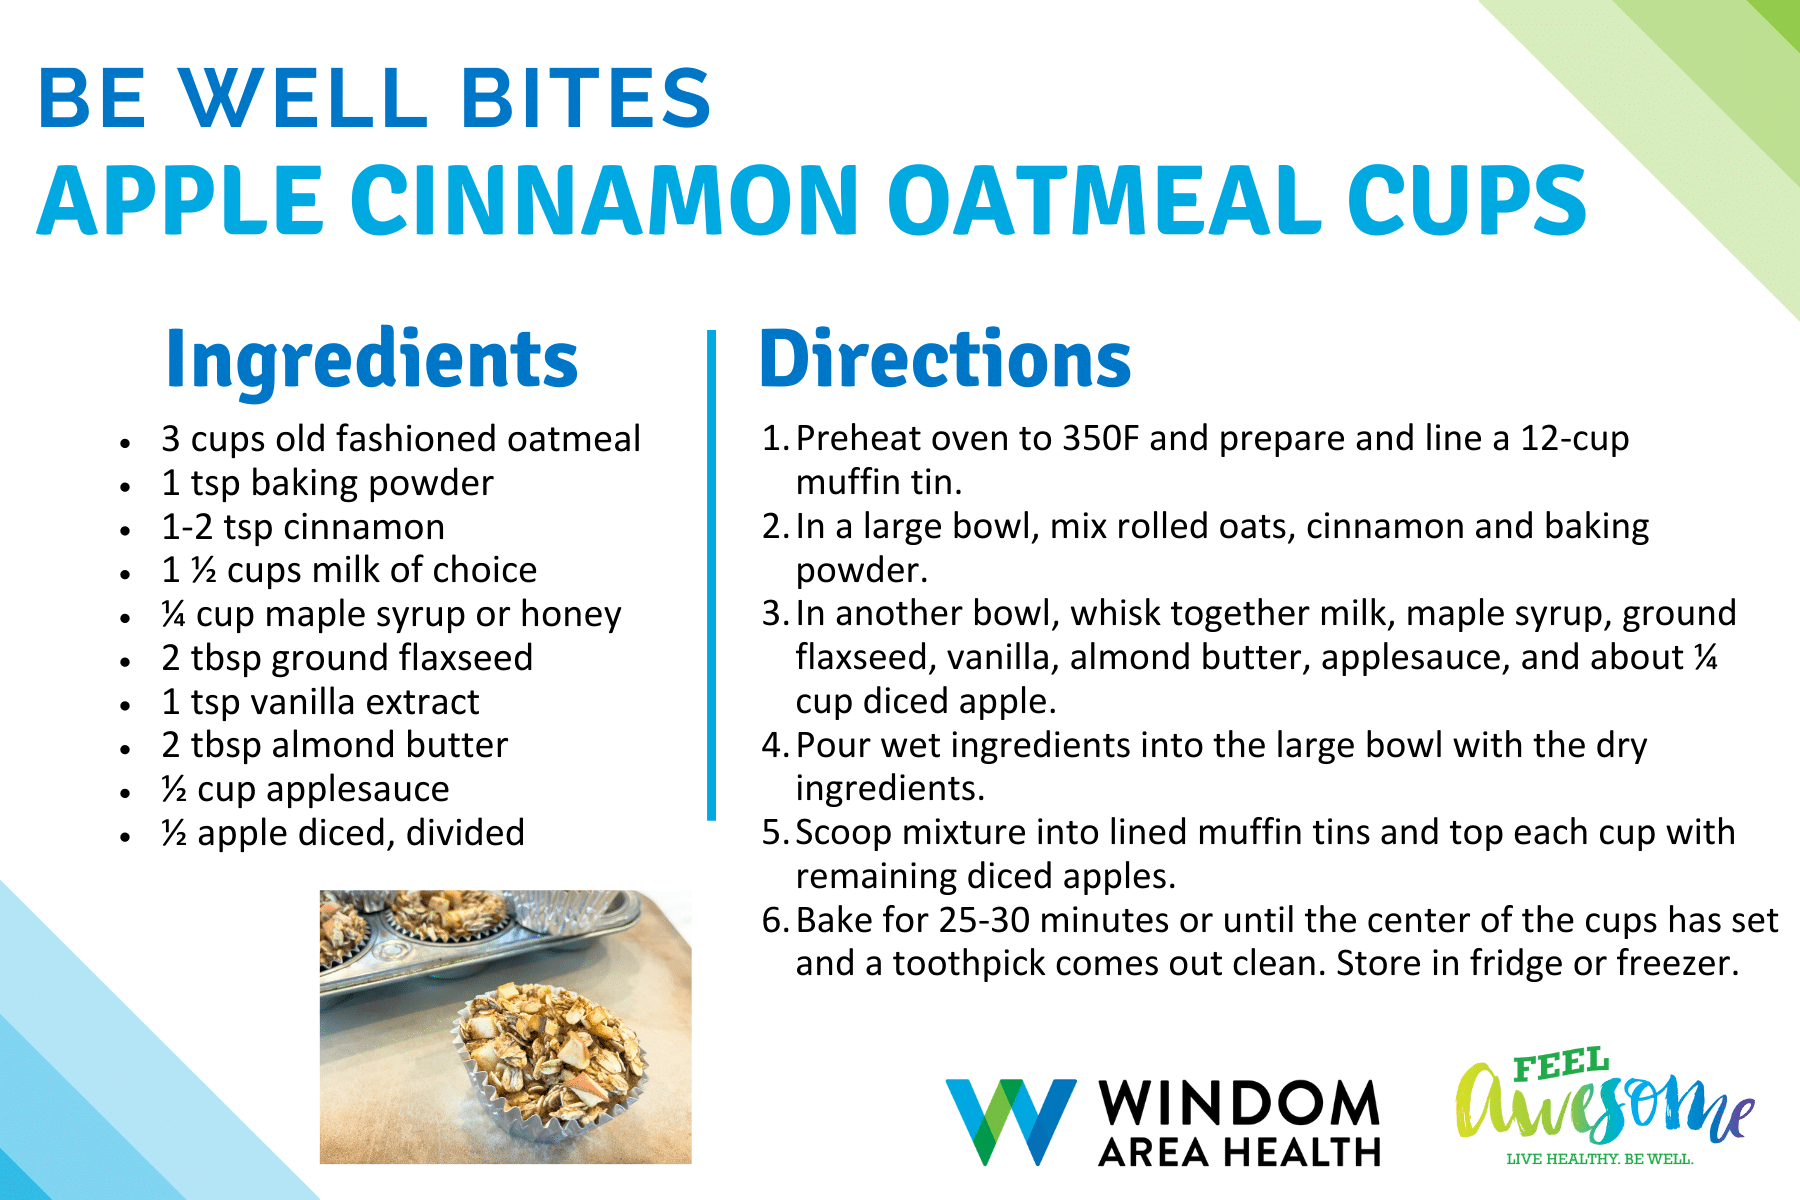 Be Well Bites Apple Cinnamon Oatmeal Cups